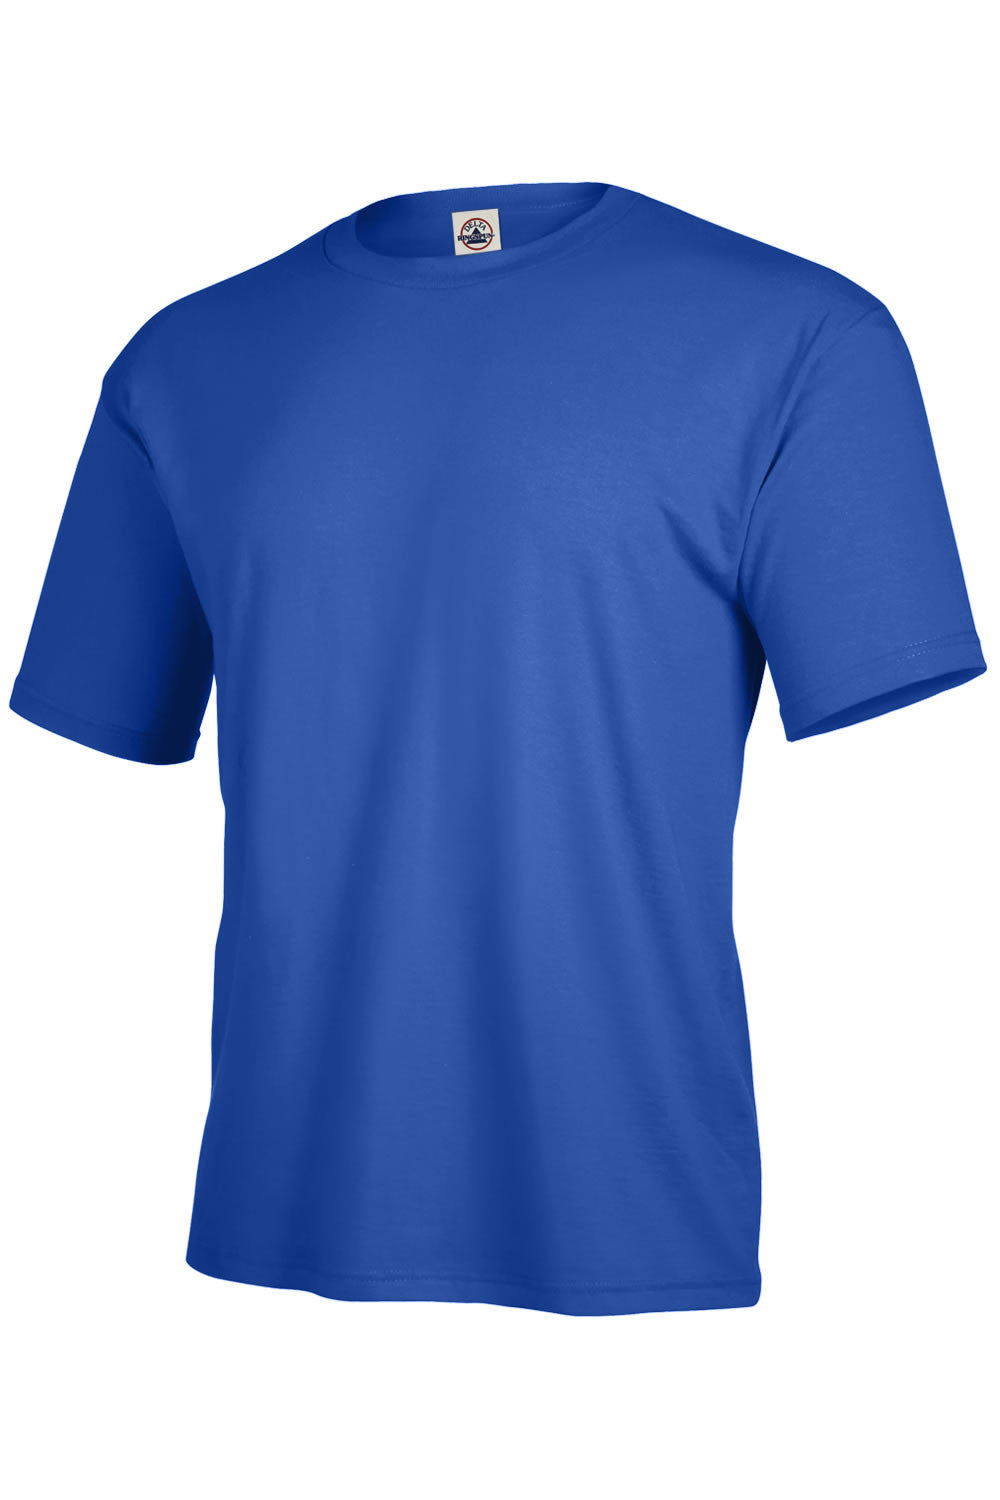 Delta Ringspun Surf T-shirt 5.5 oz - Graphic Comfort
 - 1